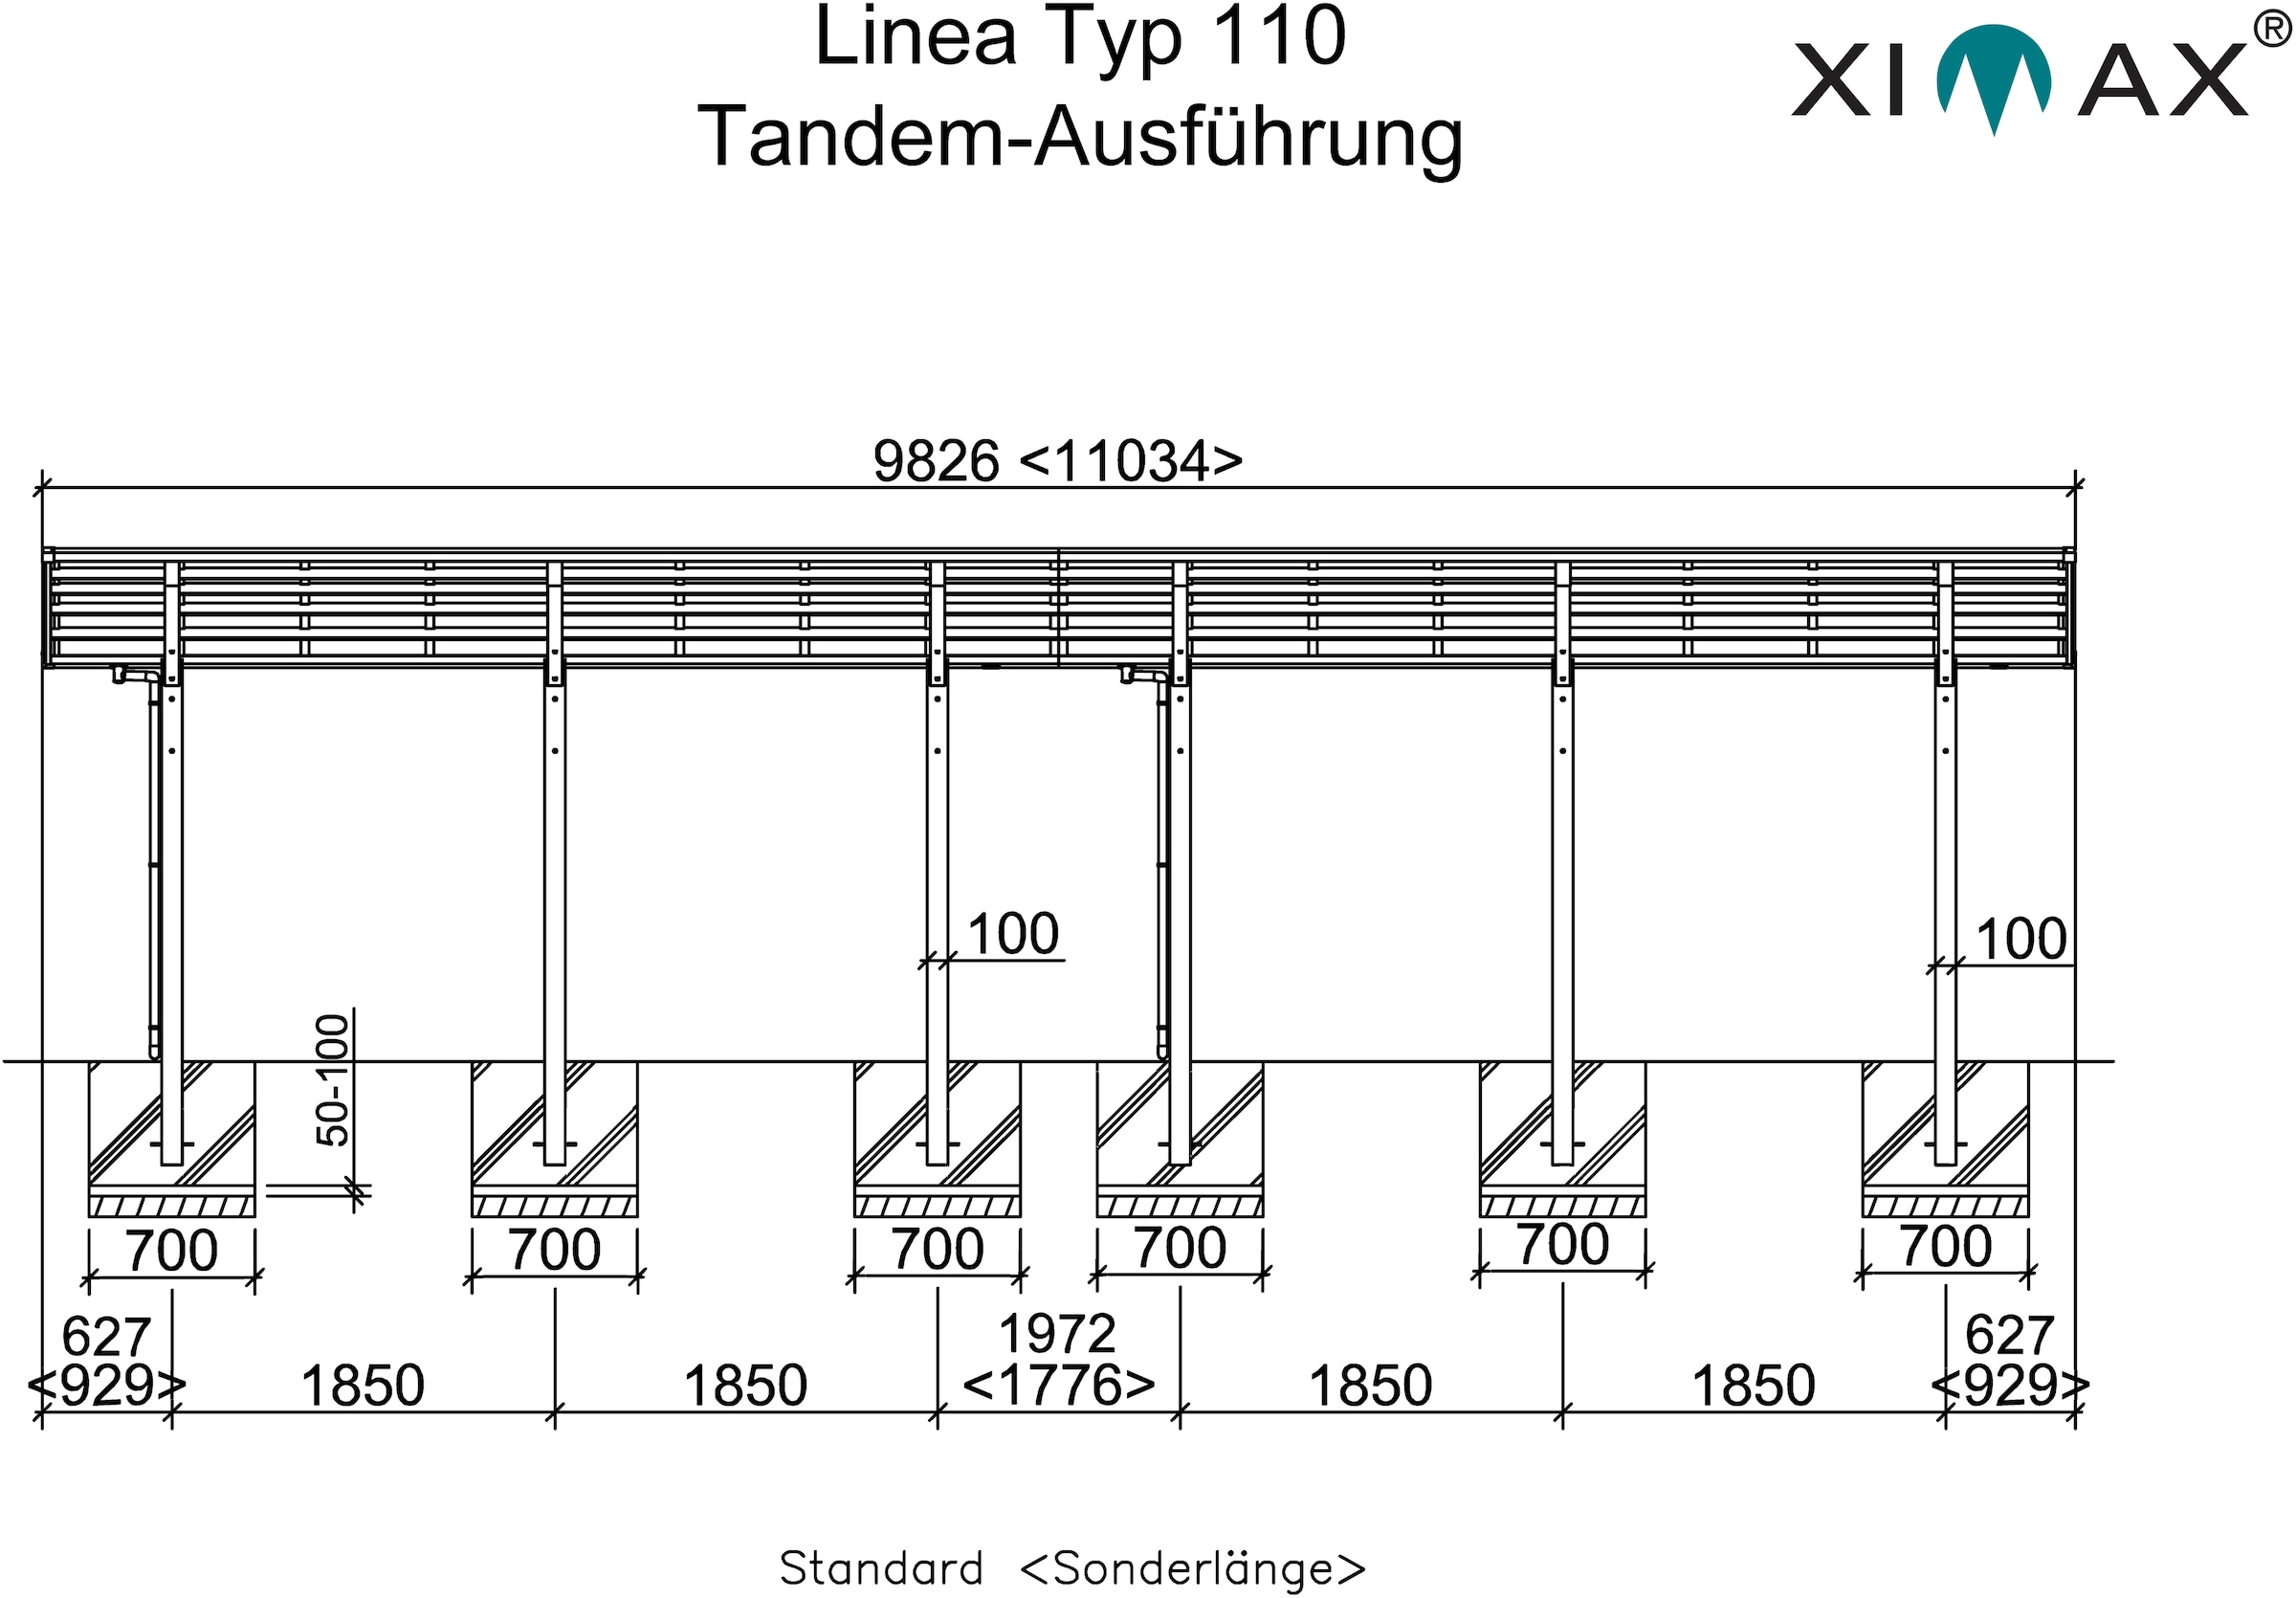 Ximax Doppelcarport »Linea Typ 110 Tandem-Edelstahl-Look«, Aluminium, 257 cm,  edelstahlfarben, Aluminium online kaufen